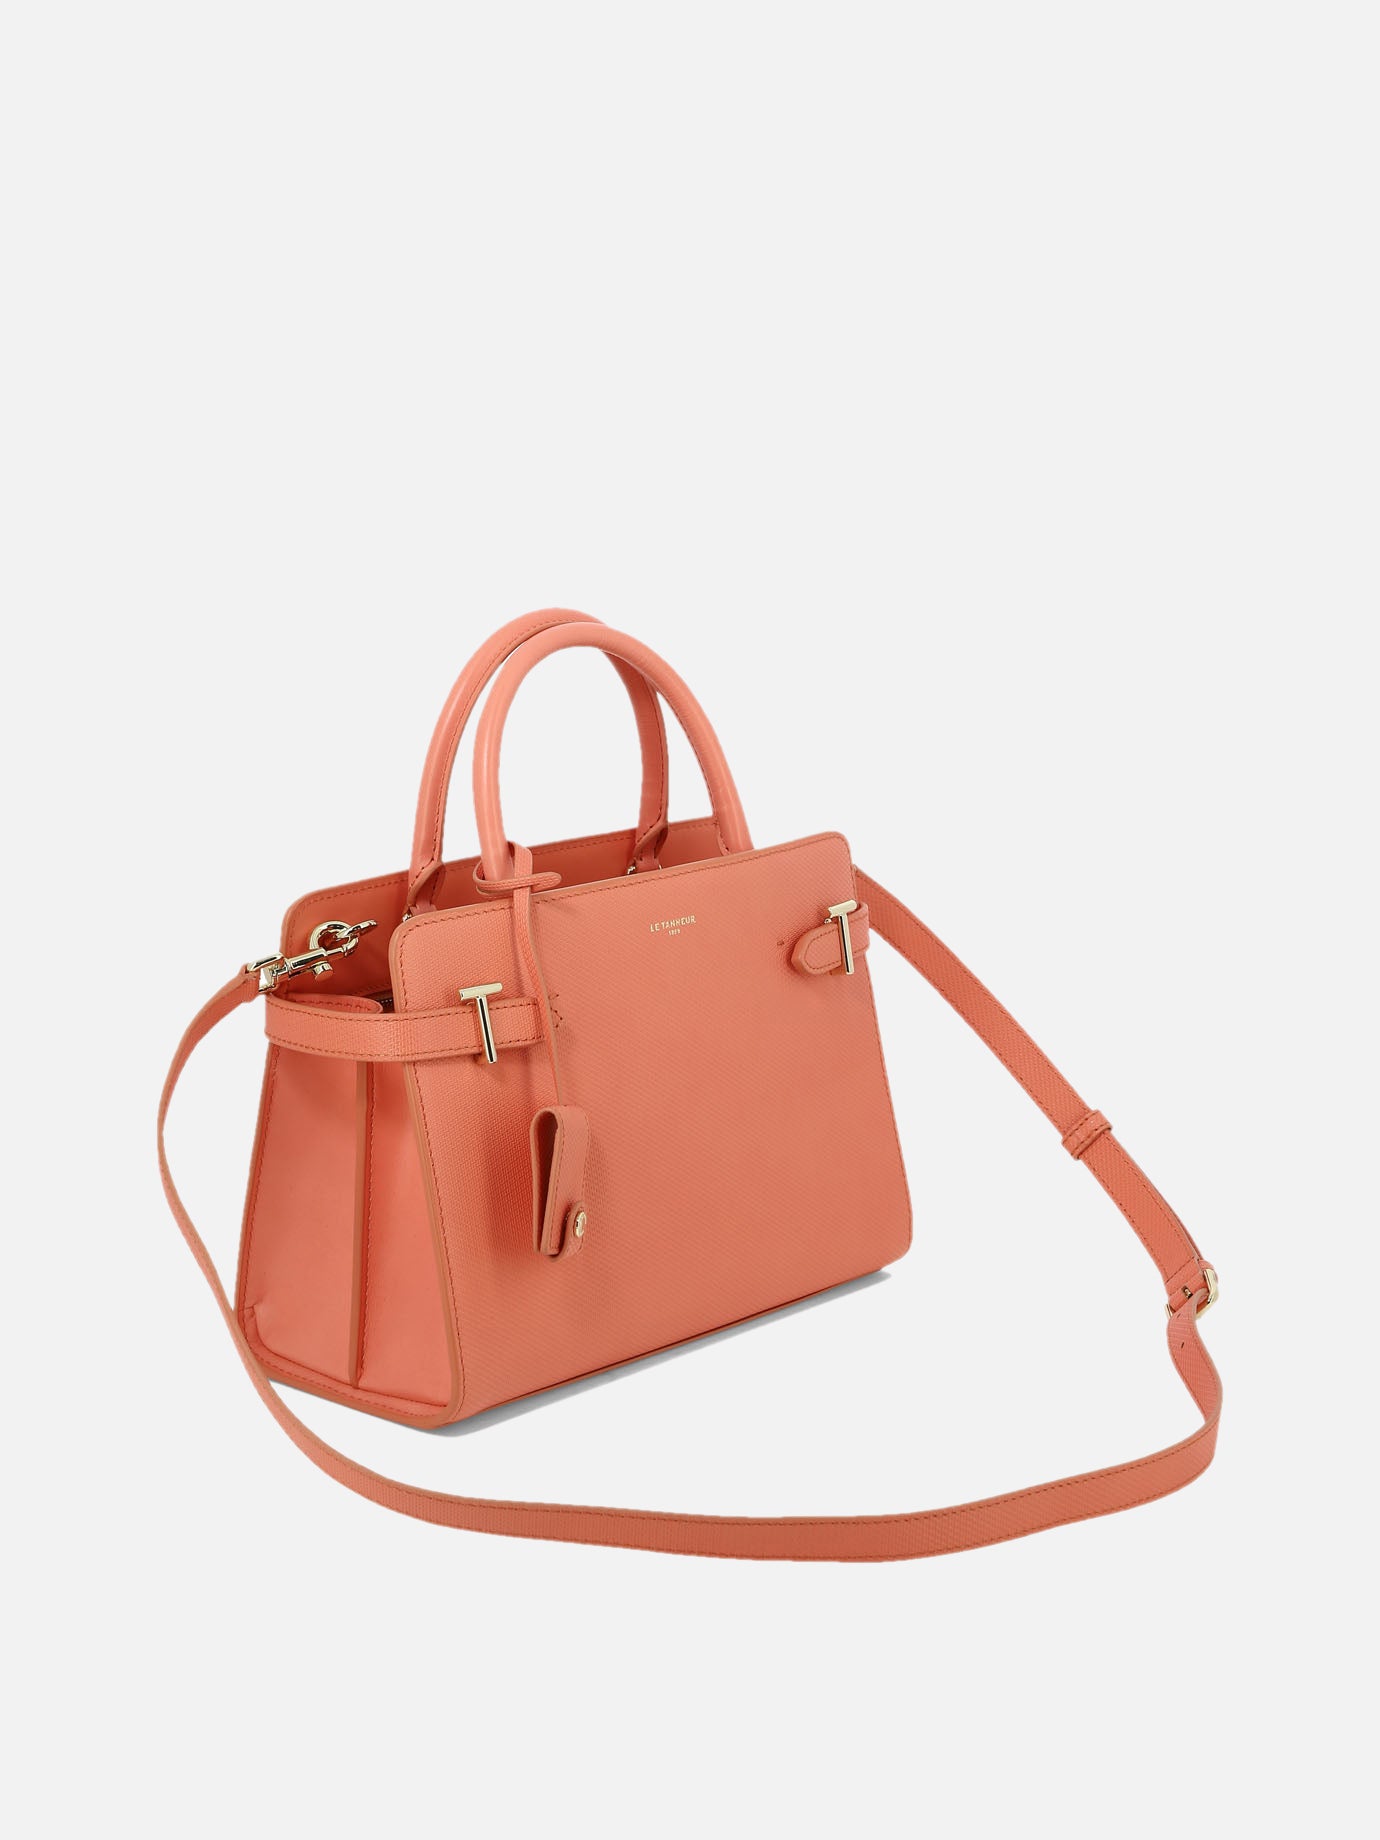 "Emilie" handbag